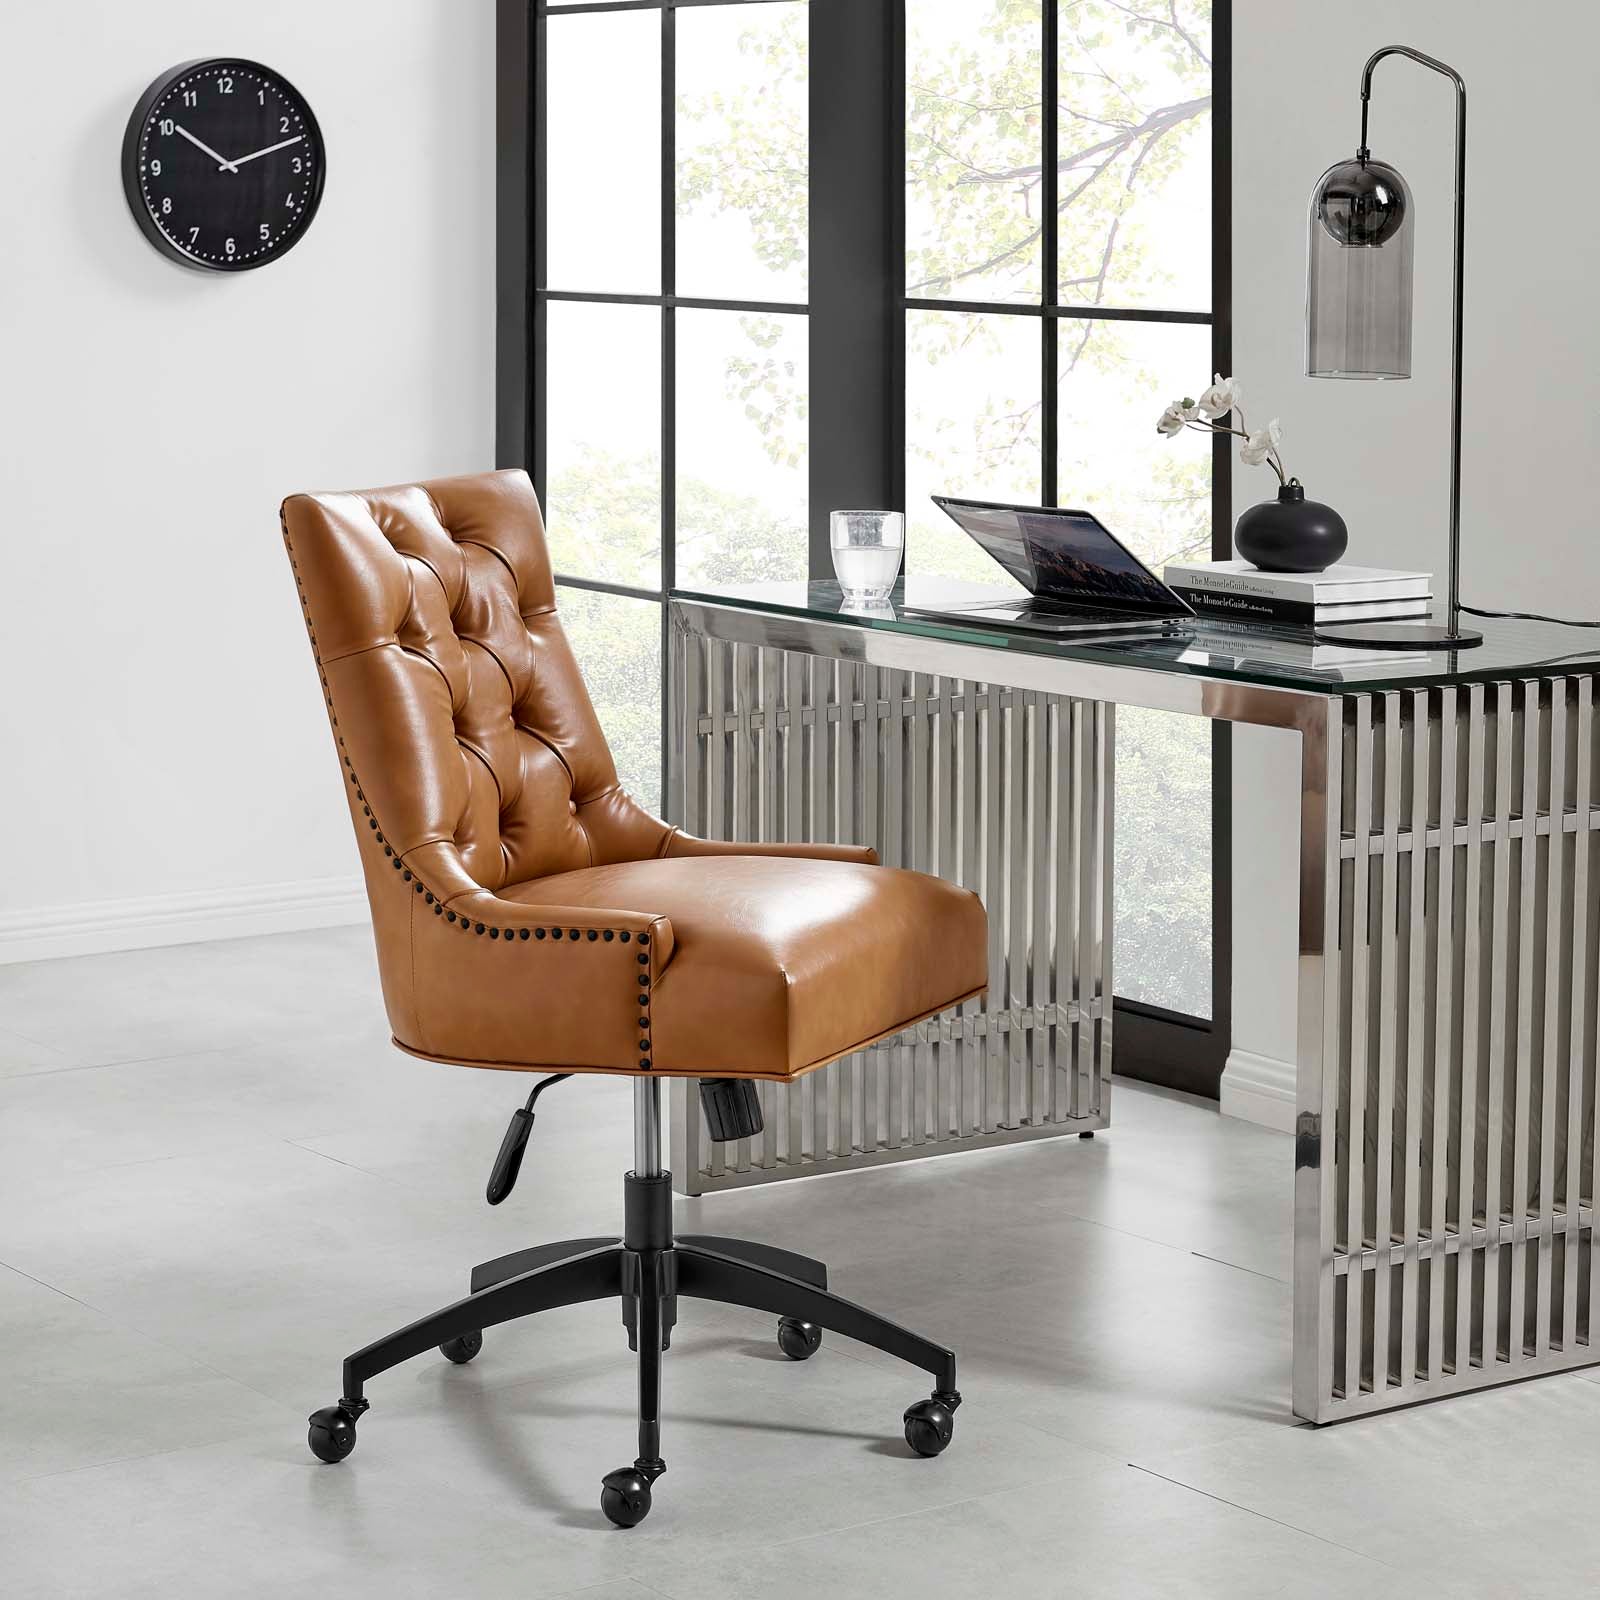 Regent Tufted Vegan Leather Office Chair - East Shore Modern Home Furnishings